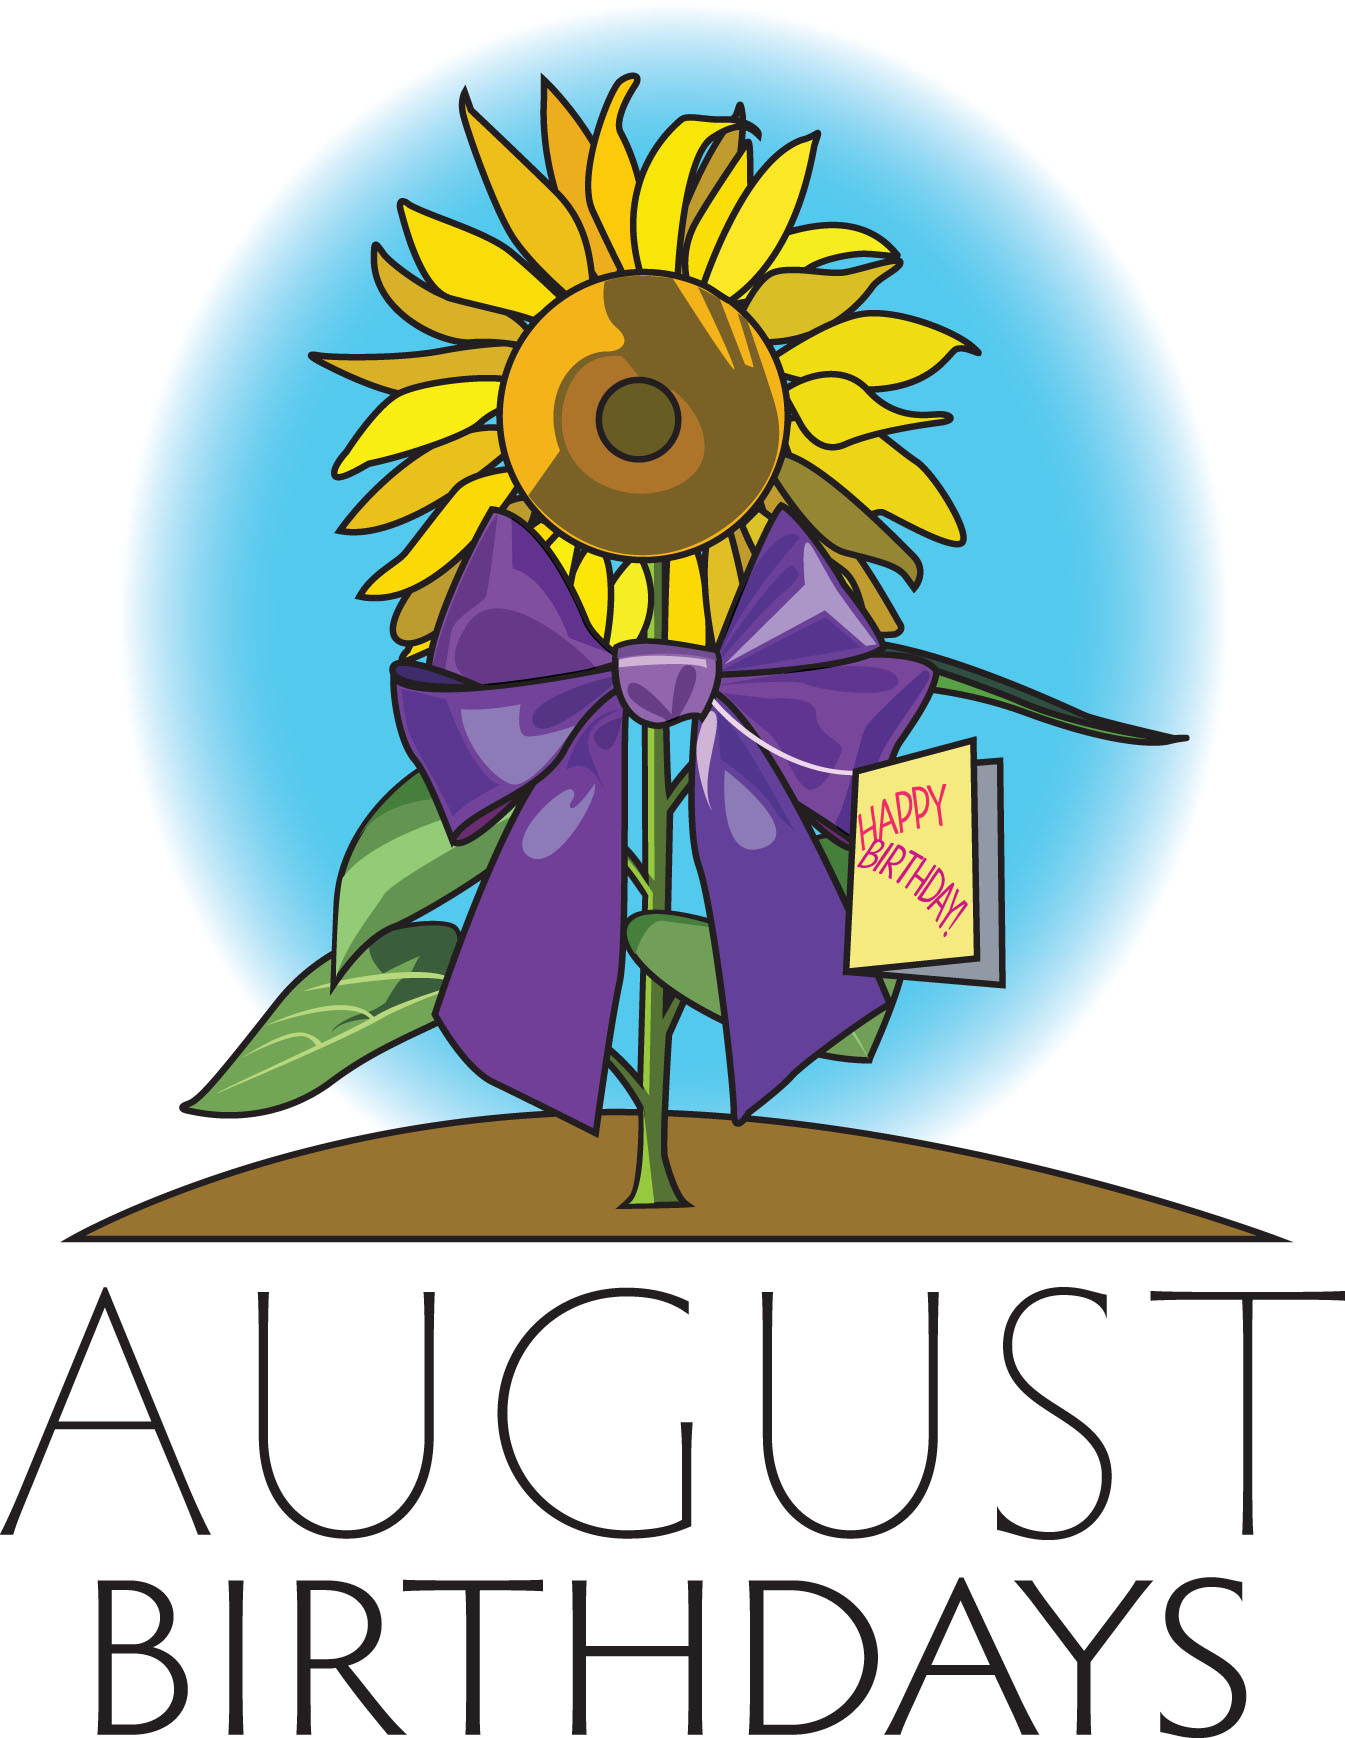 Birthday Celebration - August 20 - The Presbyterian Church ...